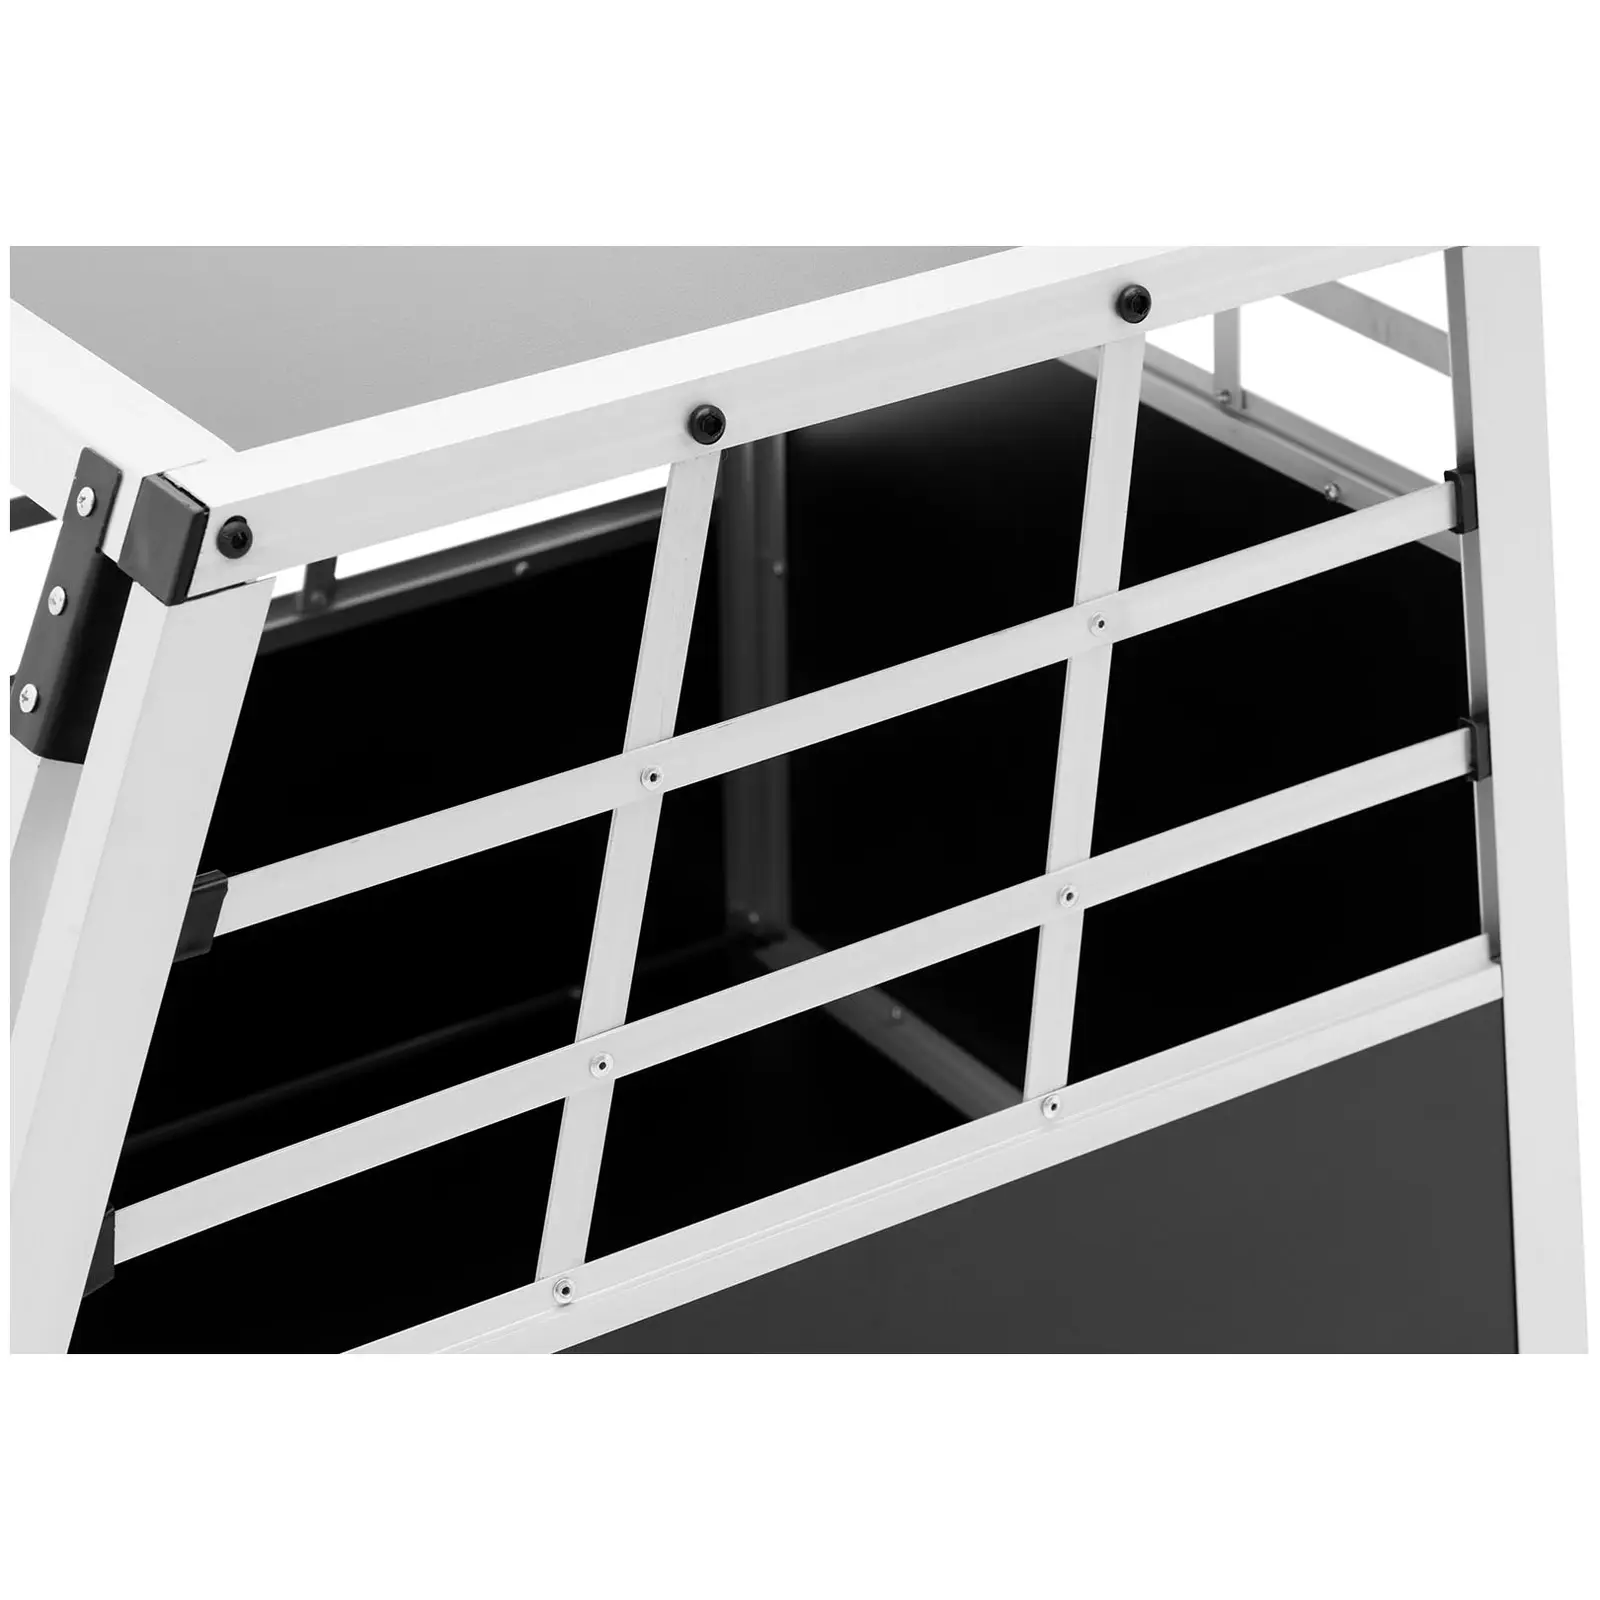 Hundetransportbox - Aluminium - Trapezform - 55 x 70 x 50 cm